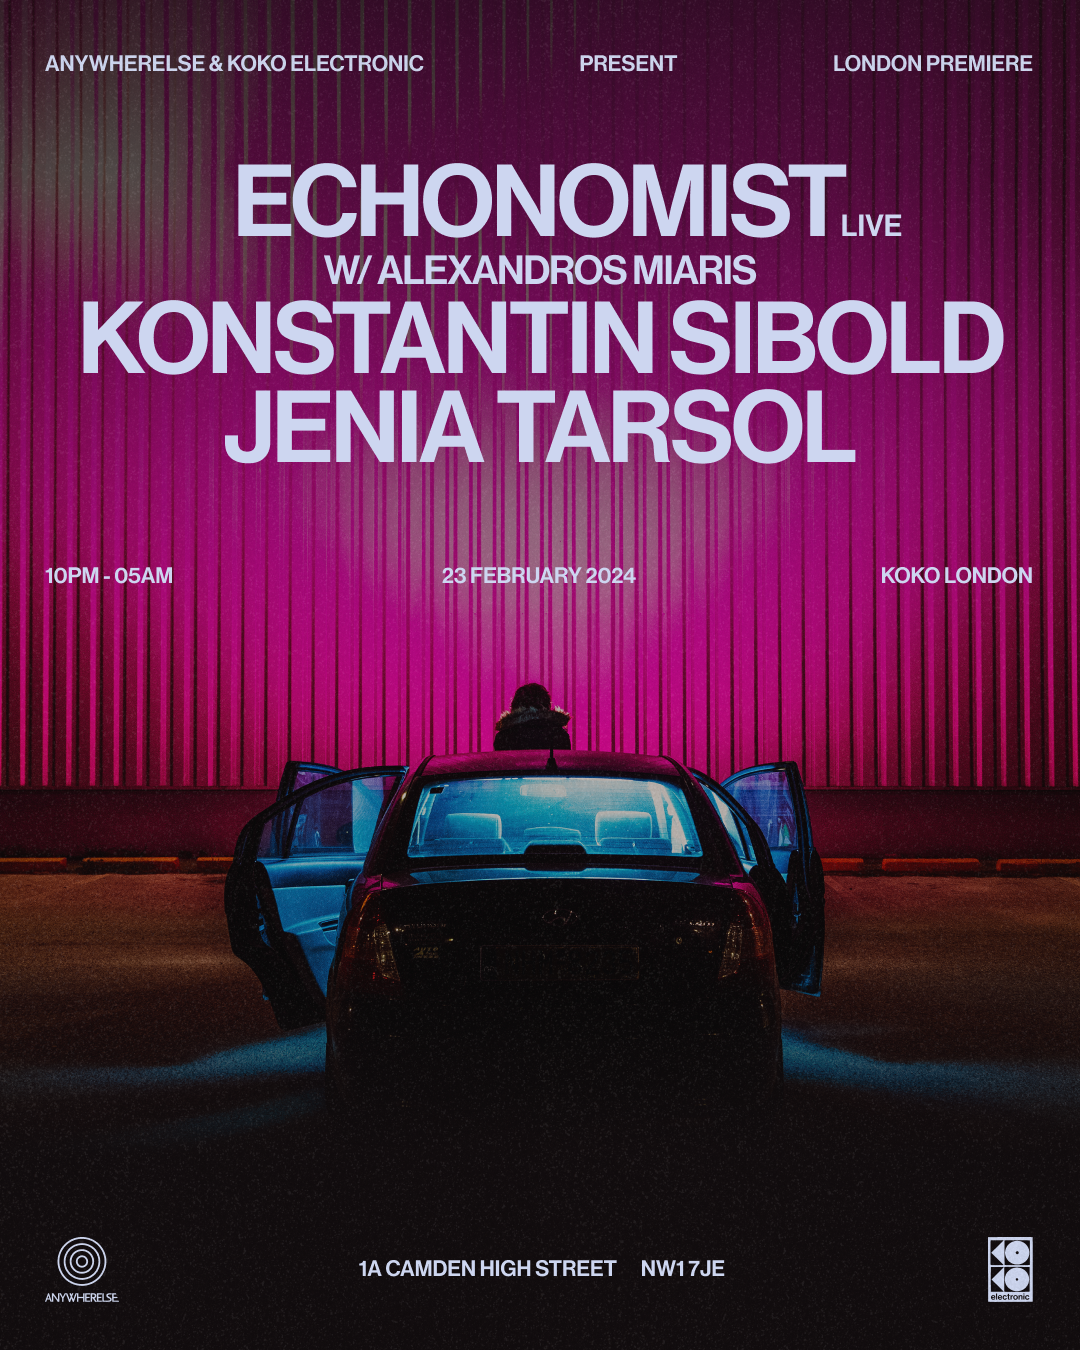 Echonomist (LIVE) + Konstantin Sibold + Jenia Tarsol by Anywherelse x KOKO Electronic - フライヤー表